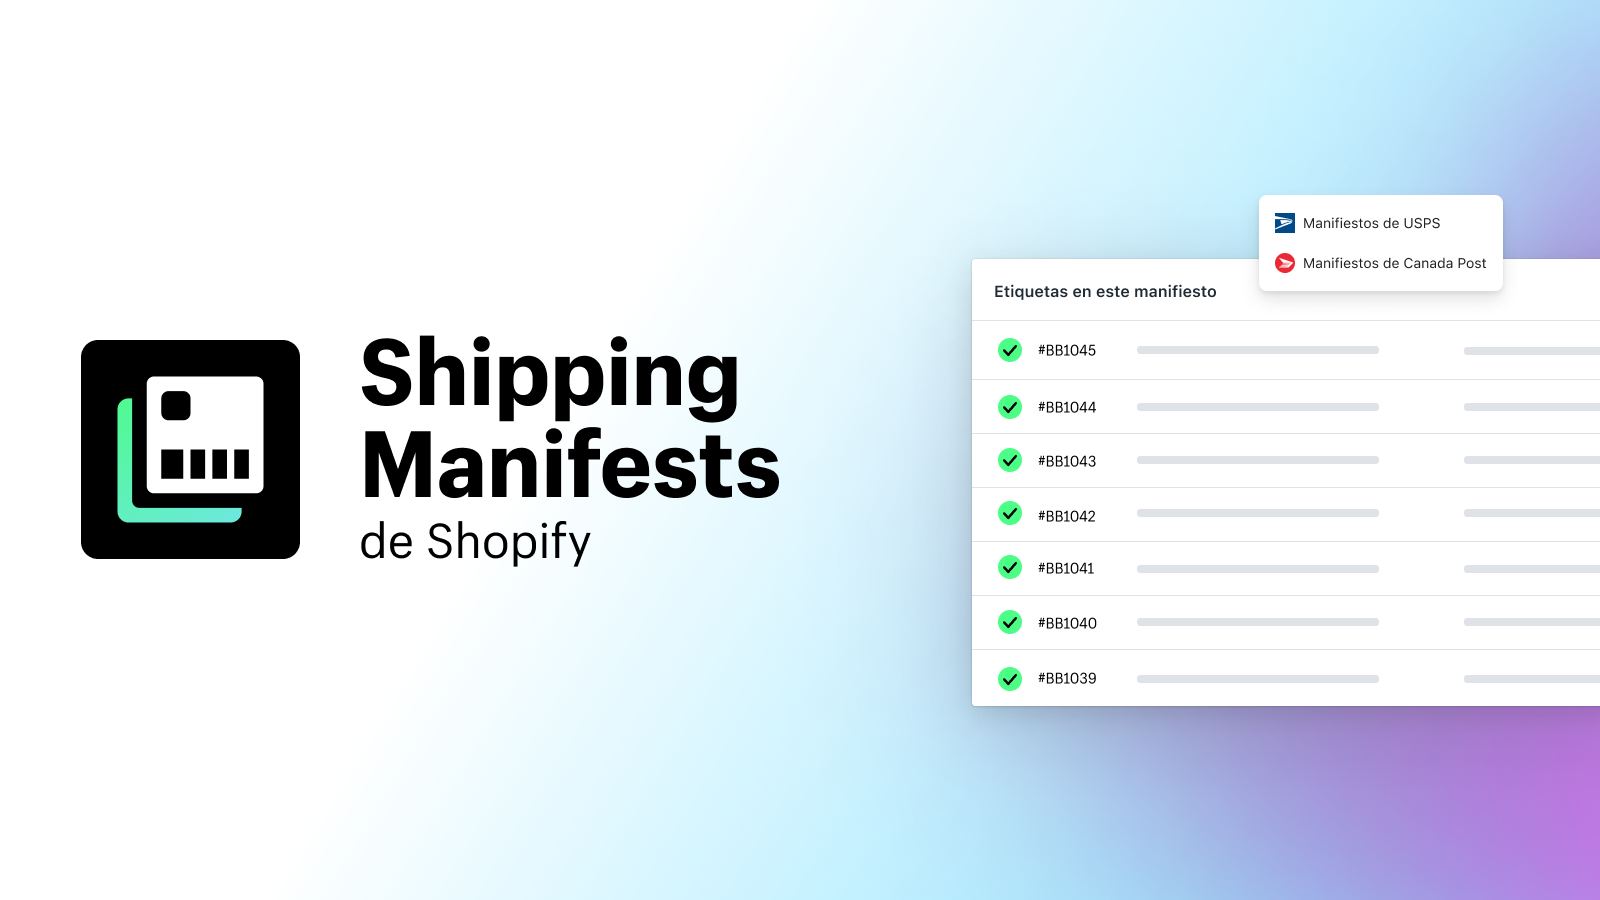 Shipping Manifests de Shopify